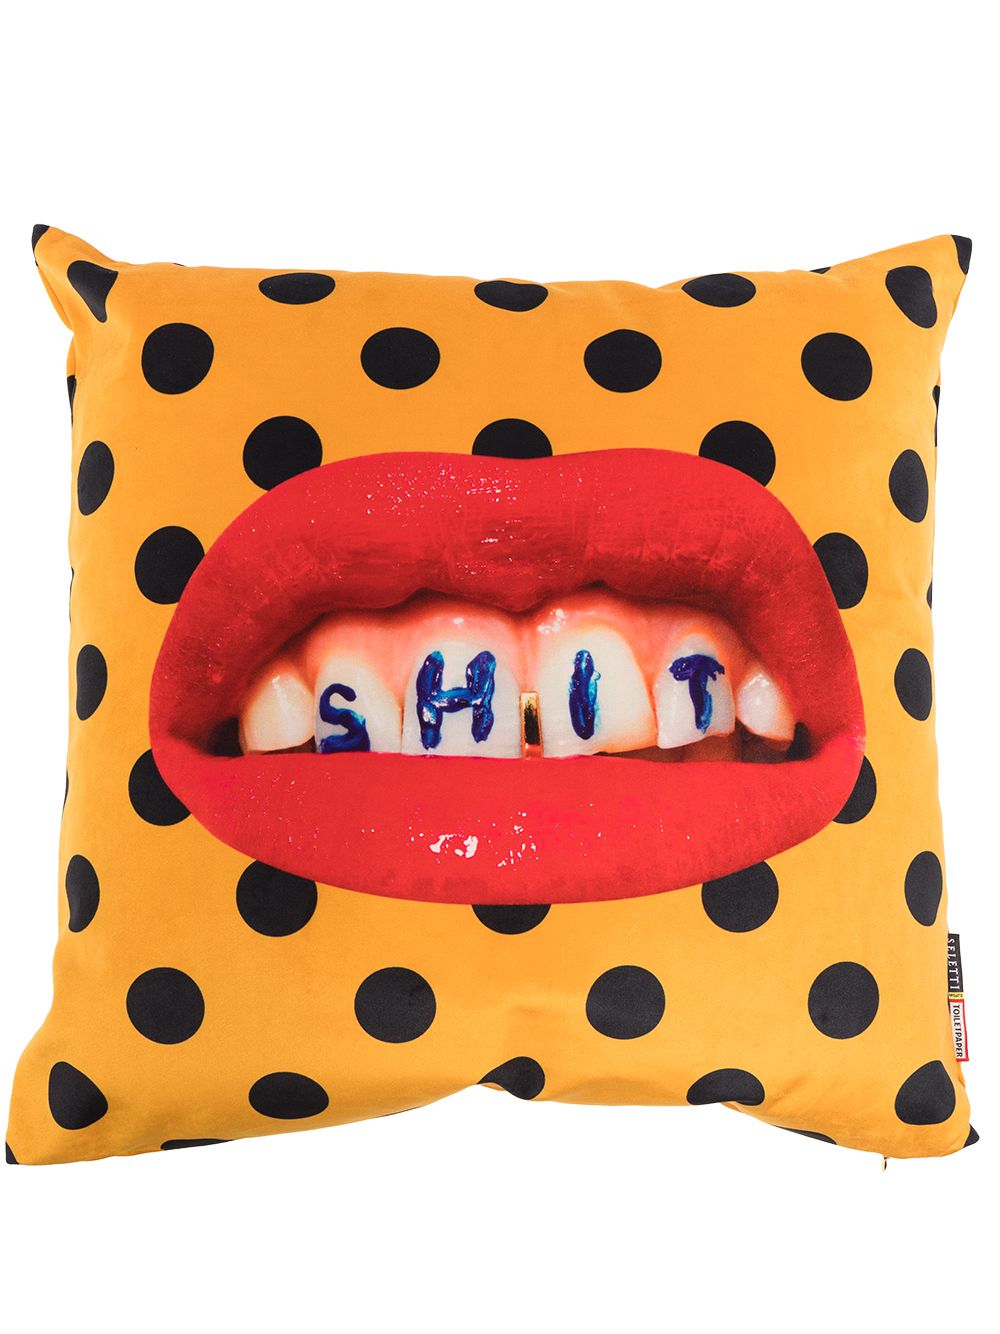 Seletti polka dot lip print cushion (50x50cm) - Yellow von Seletti